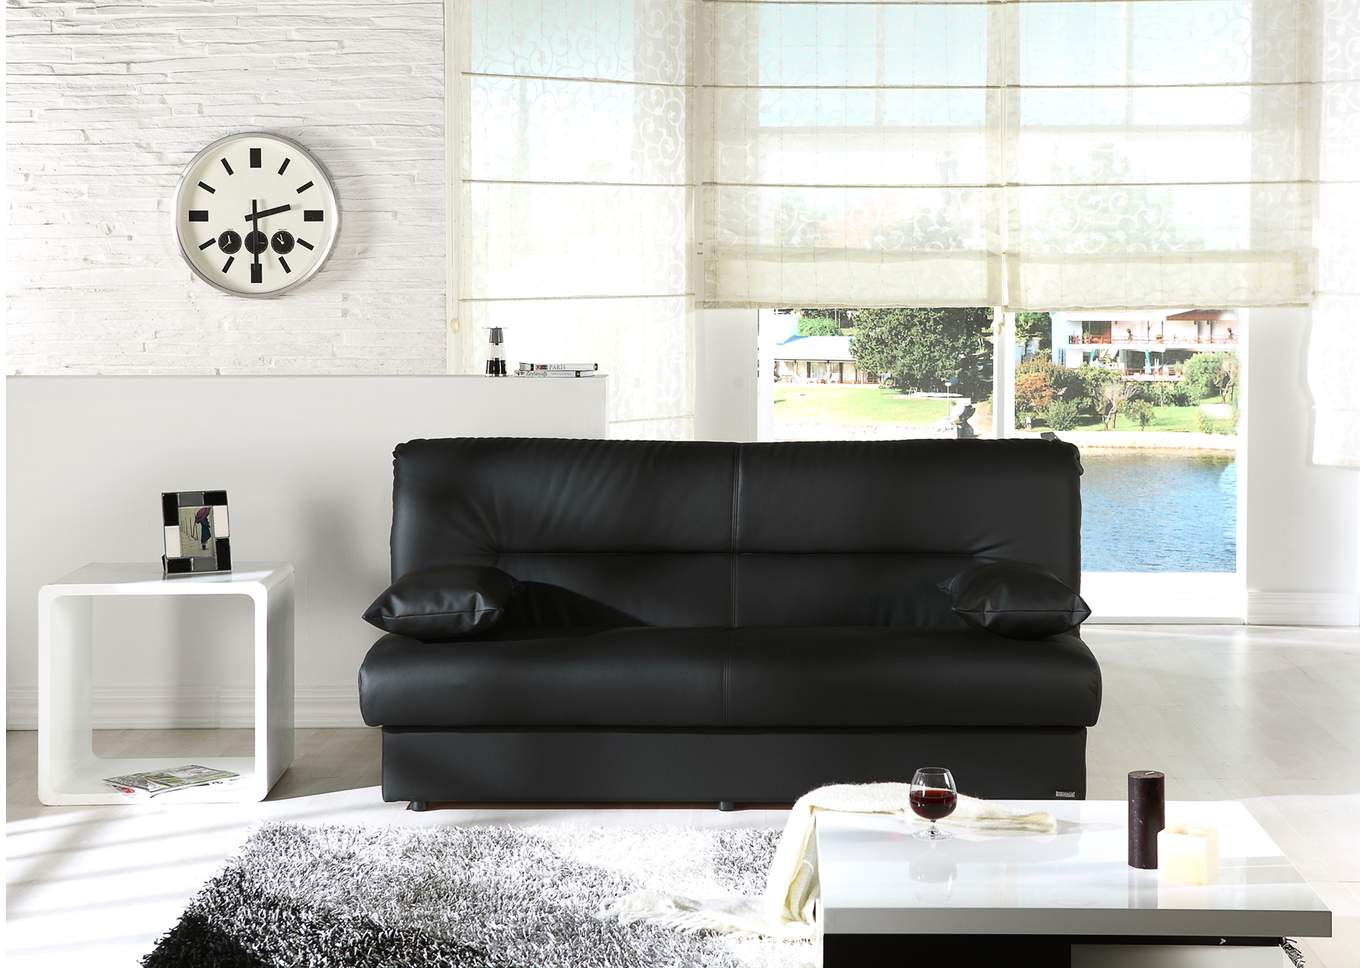 Regata Escudo Black-Pu 3 Seat Sleeper Sofa,Hudson Furniture & Bedding